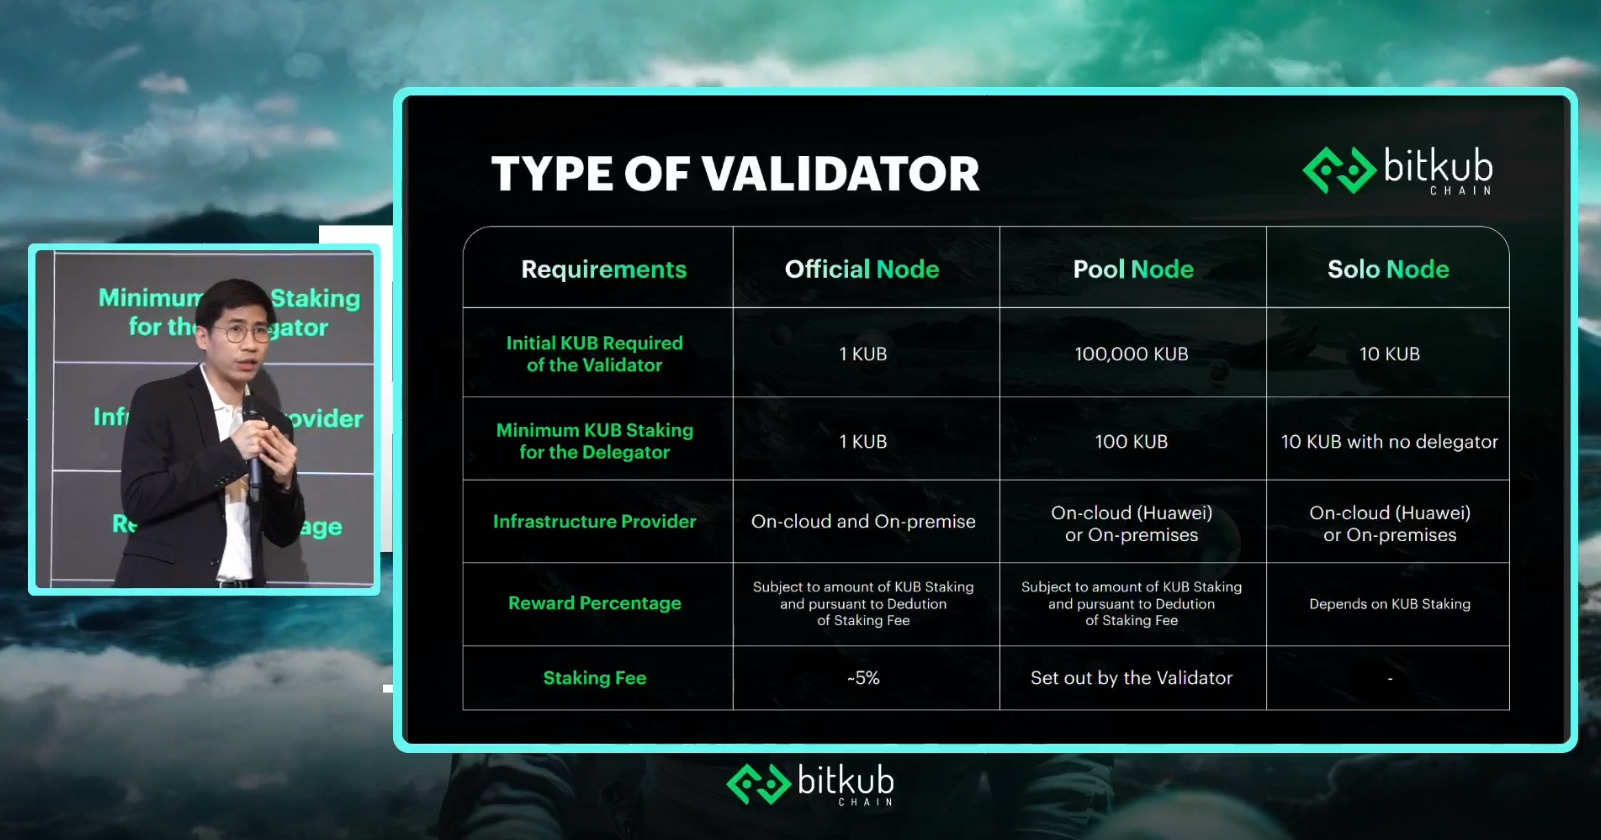 <i>ประเภทต่างๆ ของ Validator ของ Bitkub Chain</i>